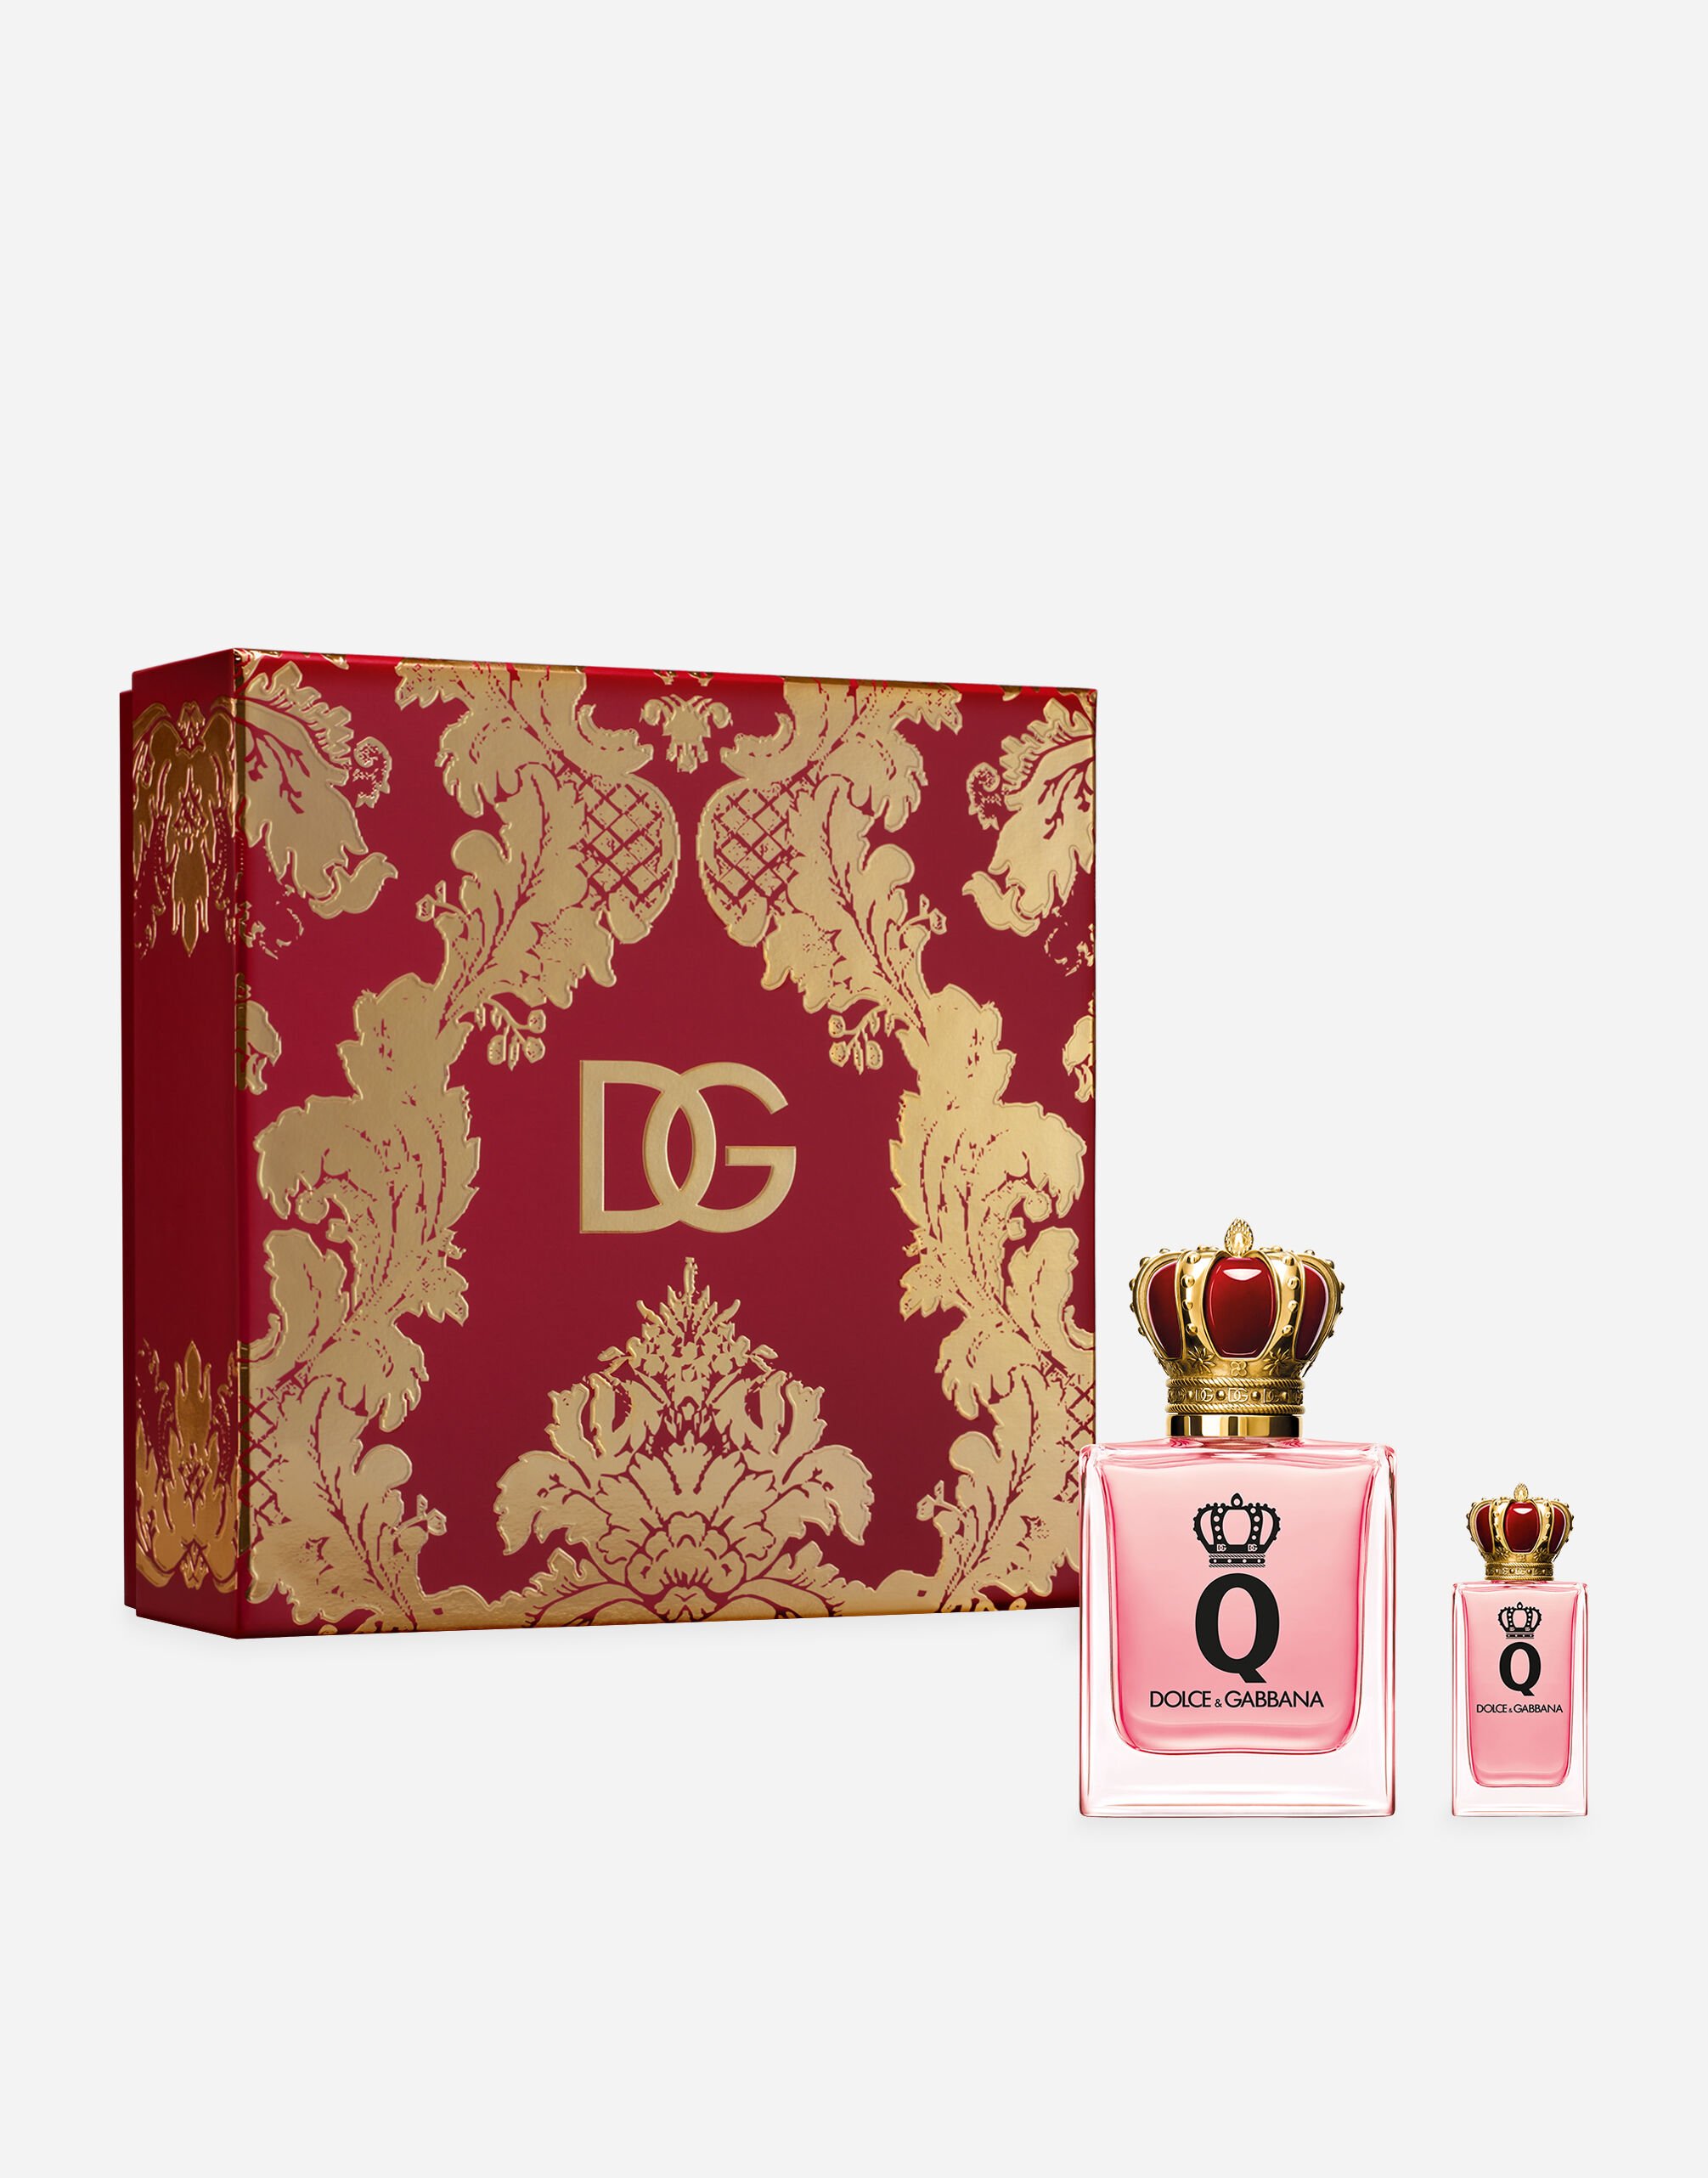 Dolce & Gabbana Exclusive Gift Set Q by Dolce&Gabbana Eau de Parfum - VP003BVP000